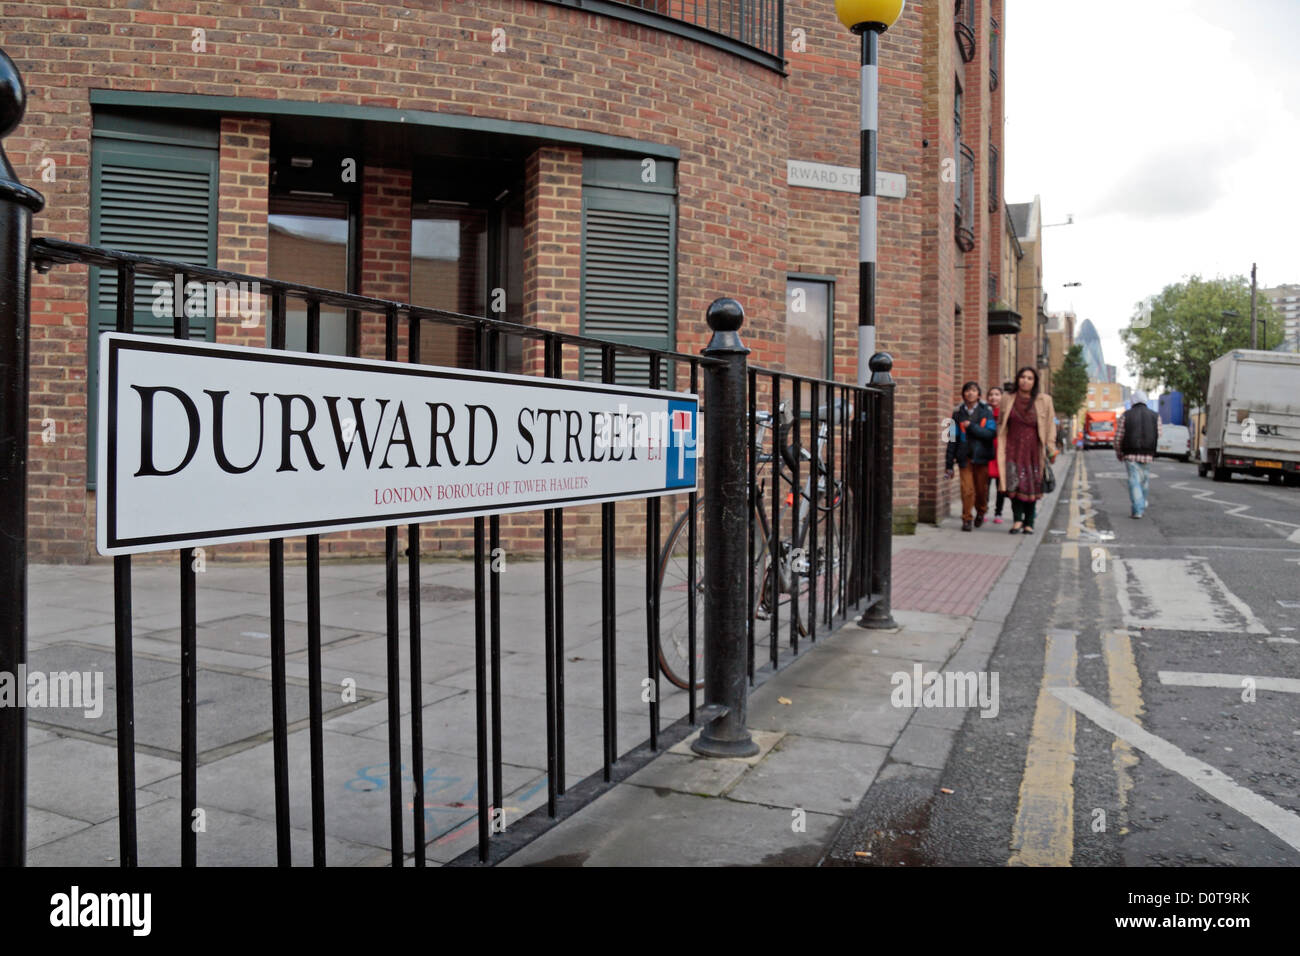 Durward Street, escena del crimen de Mary Ann Nichols, Jack el Destripador la primera víctima, Whitechapel, East London, Reino Unido. Foto de stock